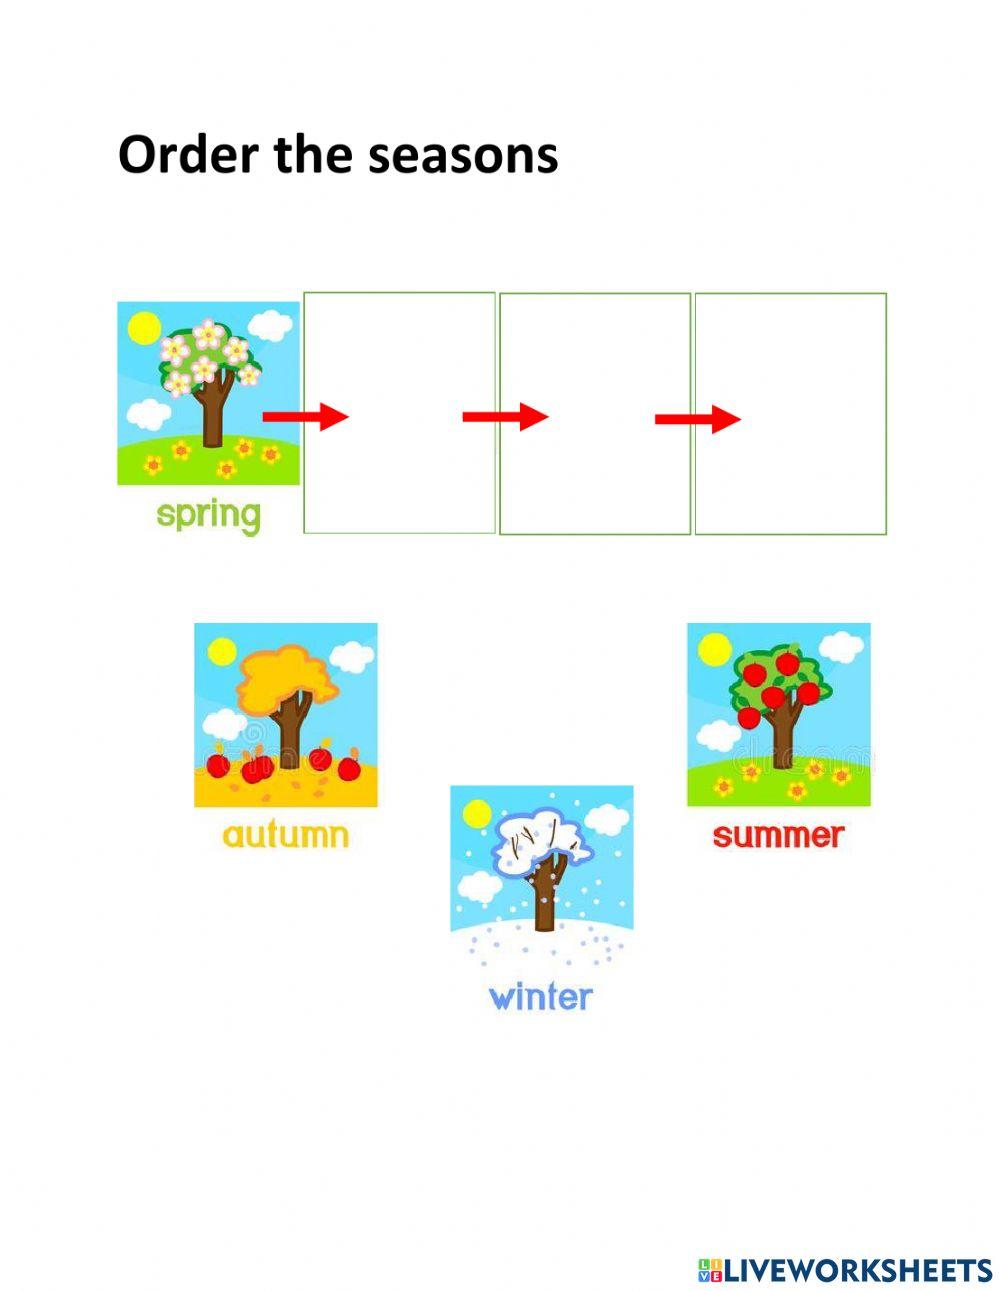 Order the seasons